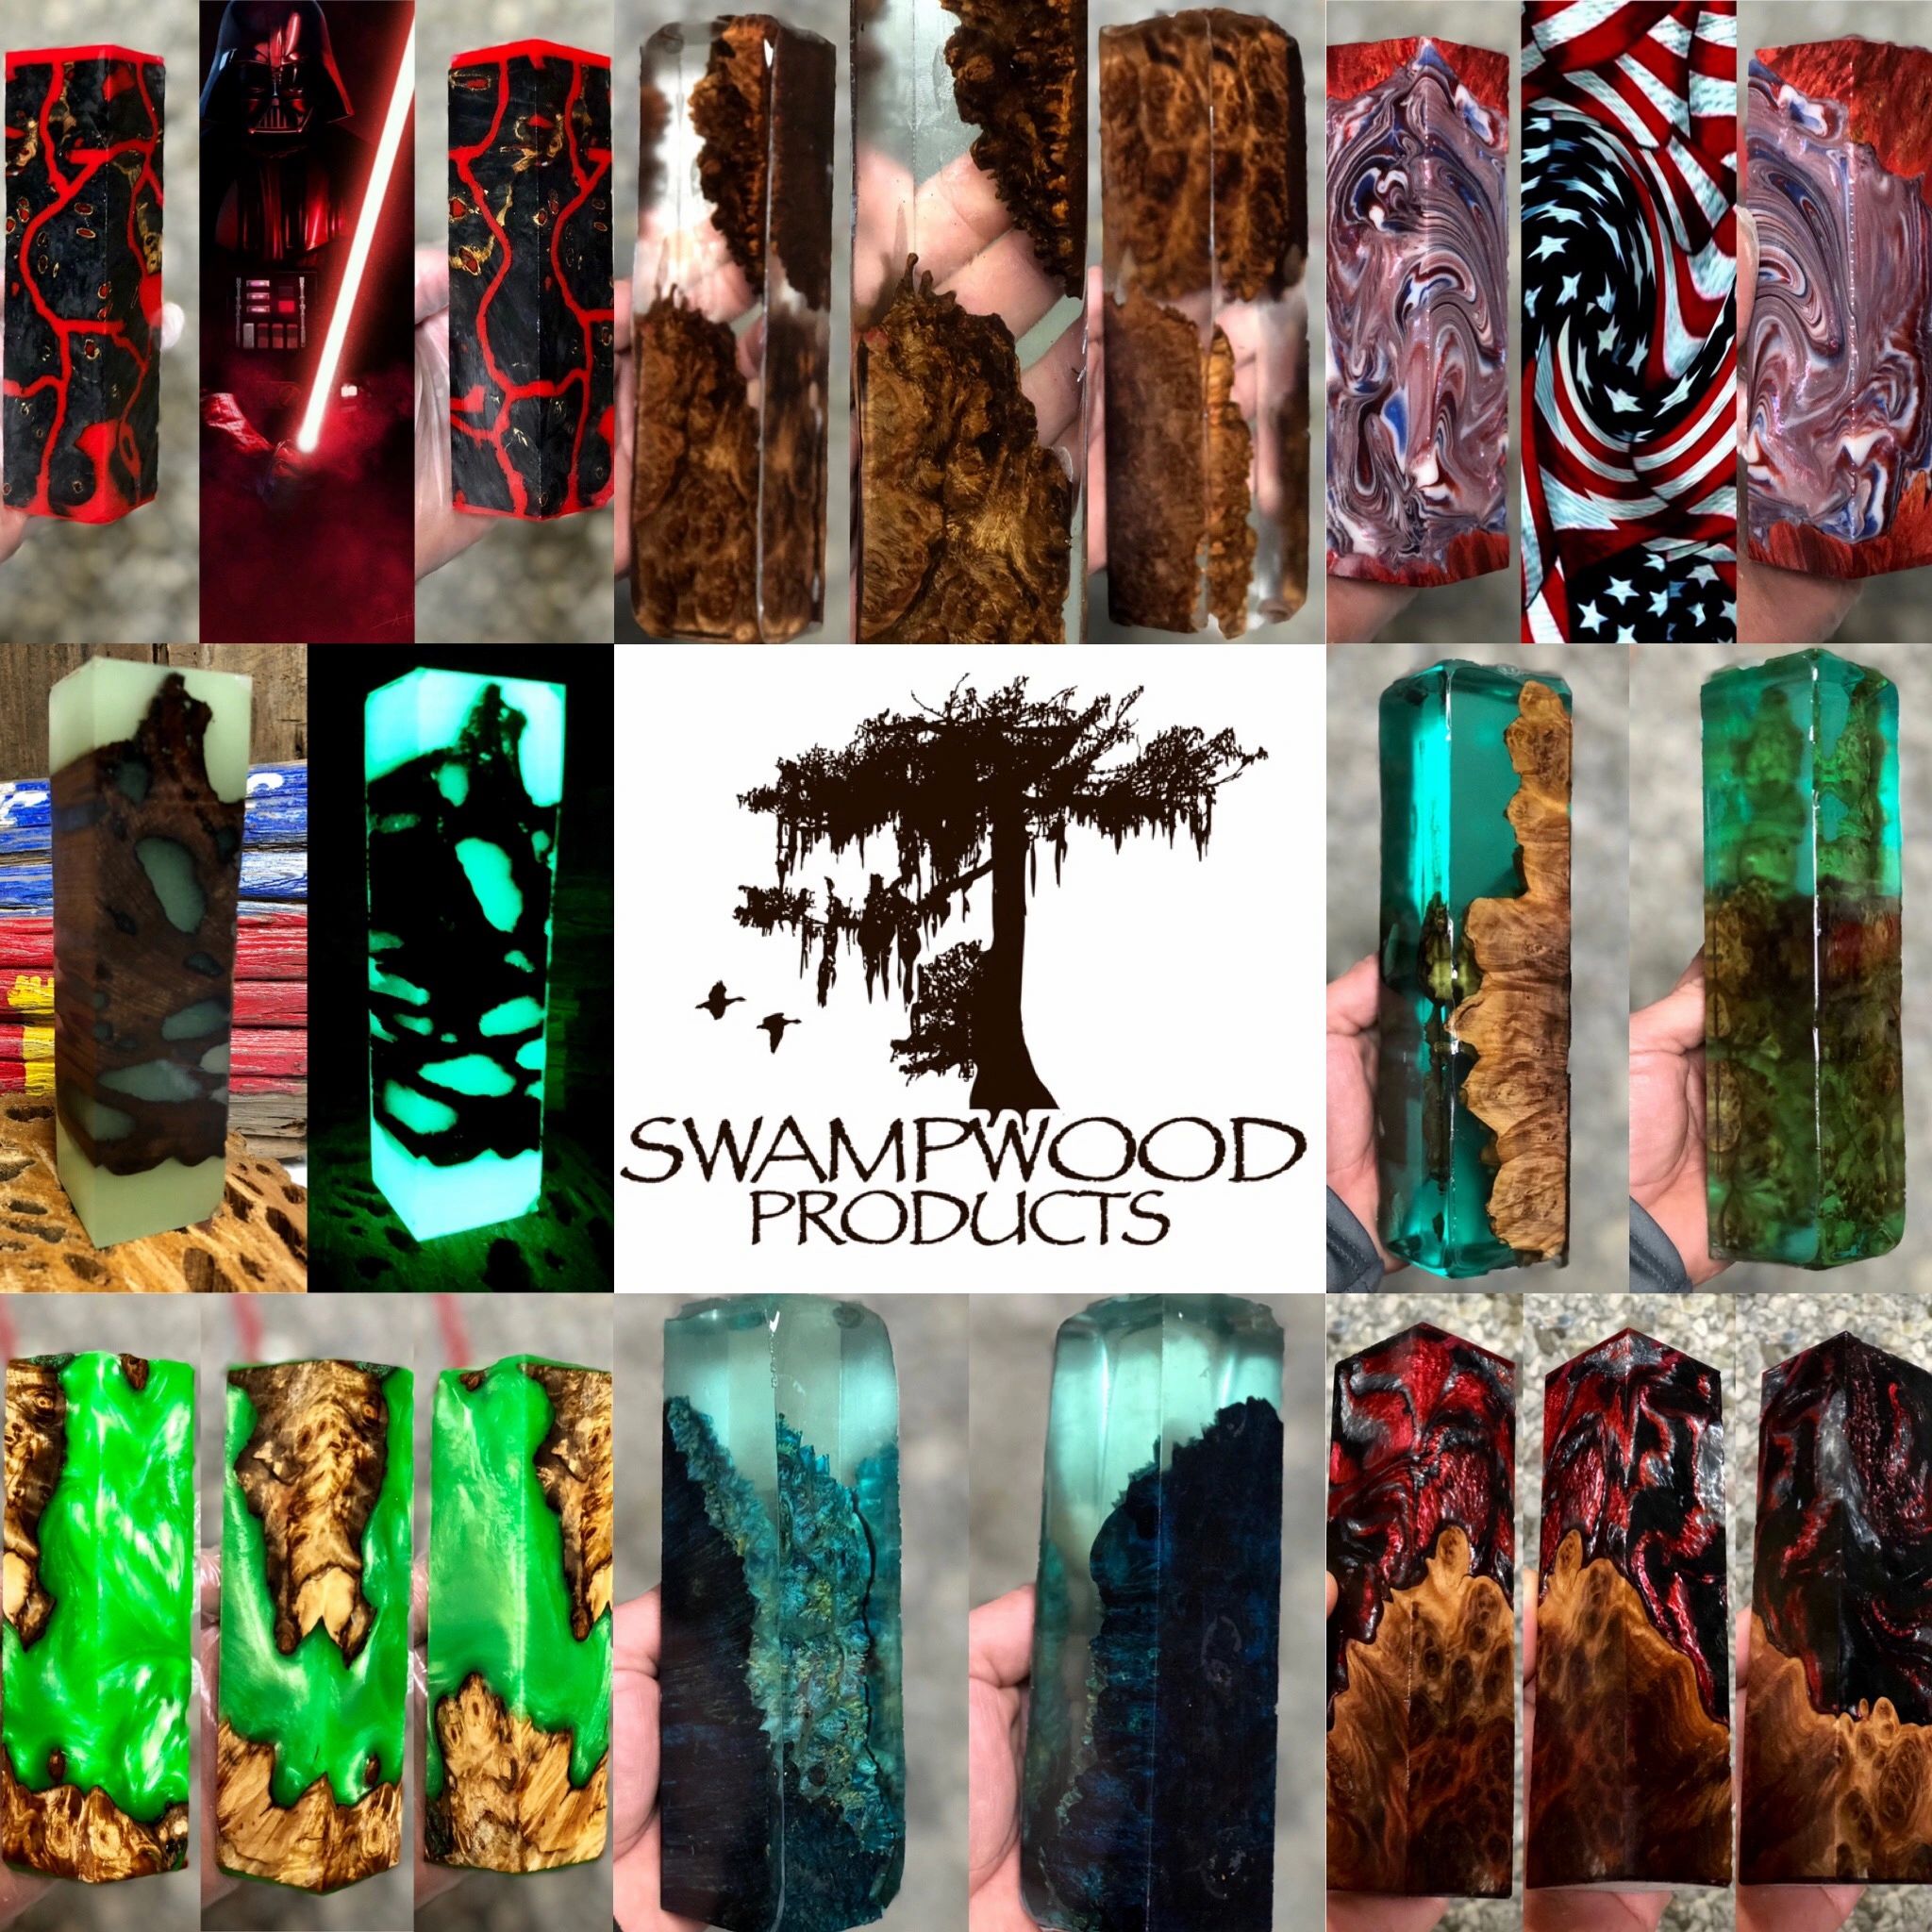 Swampwood Products - Wood Turning Blanks, Hybrid & Burl Wood